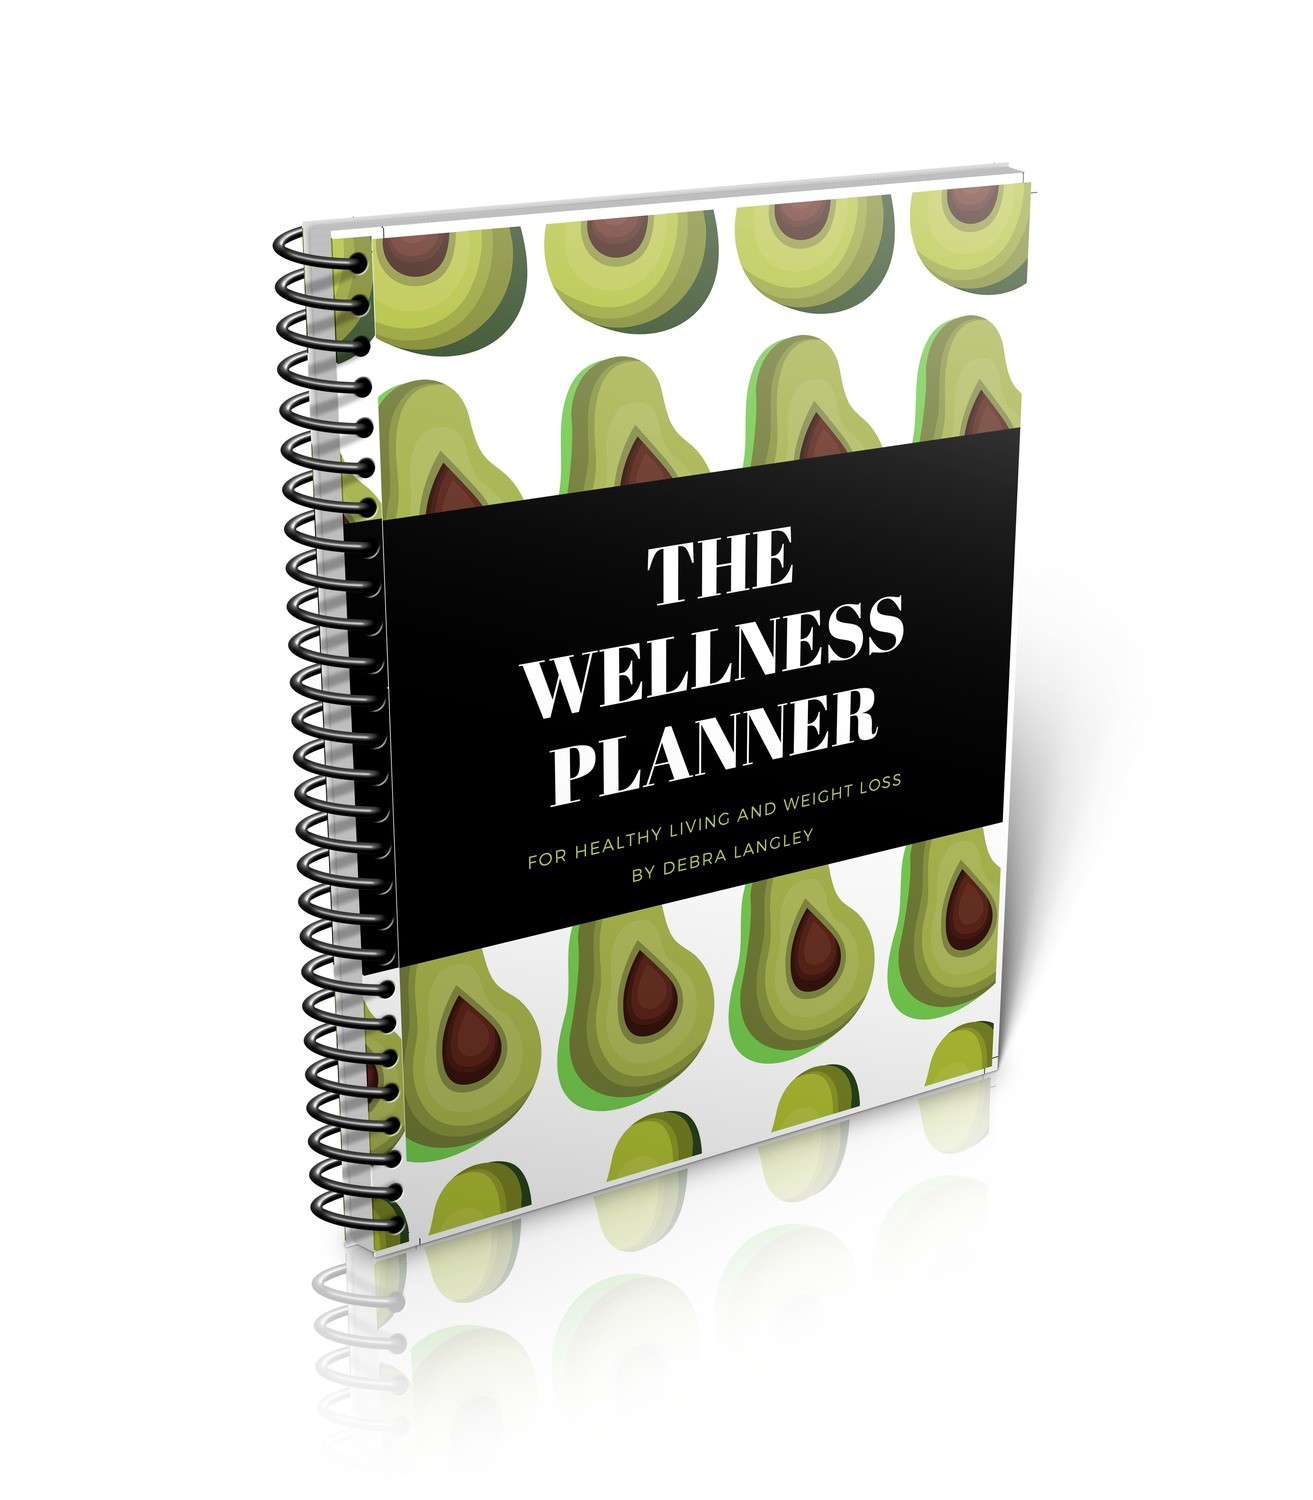 The Wellness Planner A5 Hard Copy